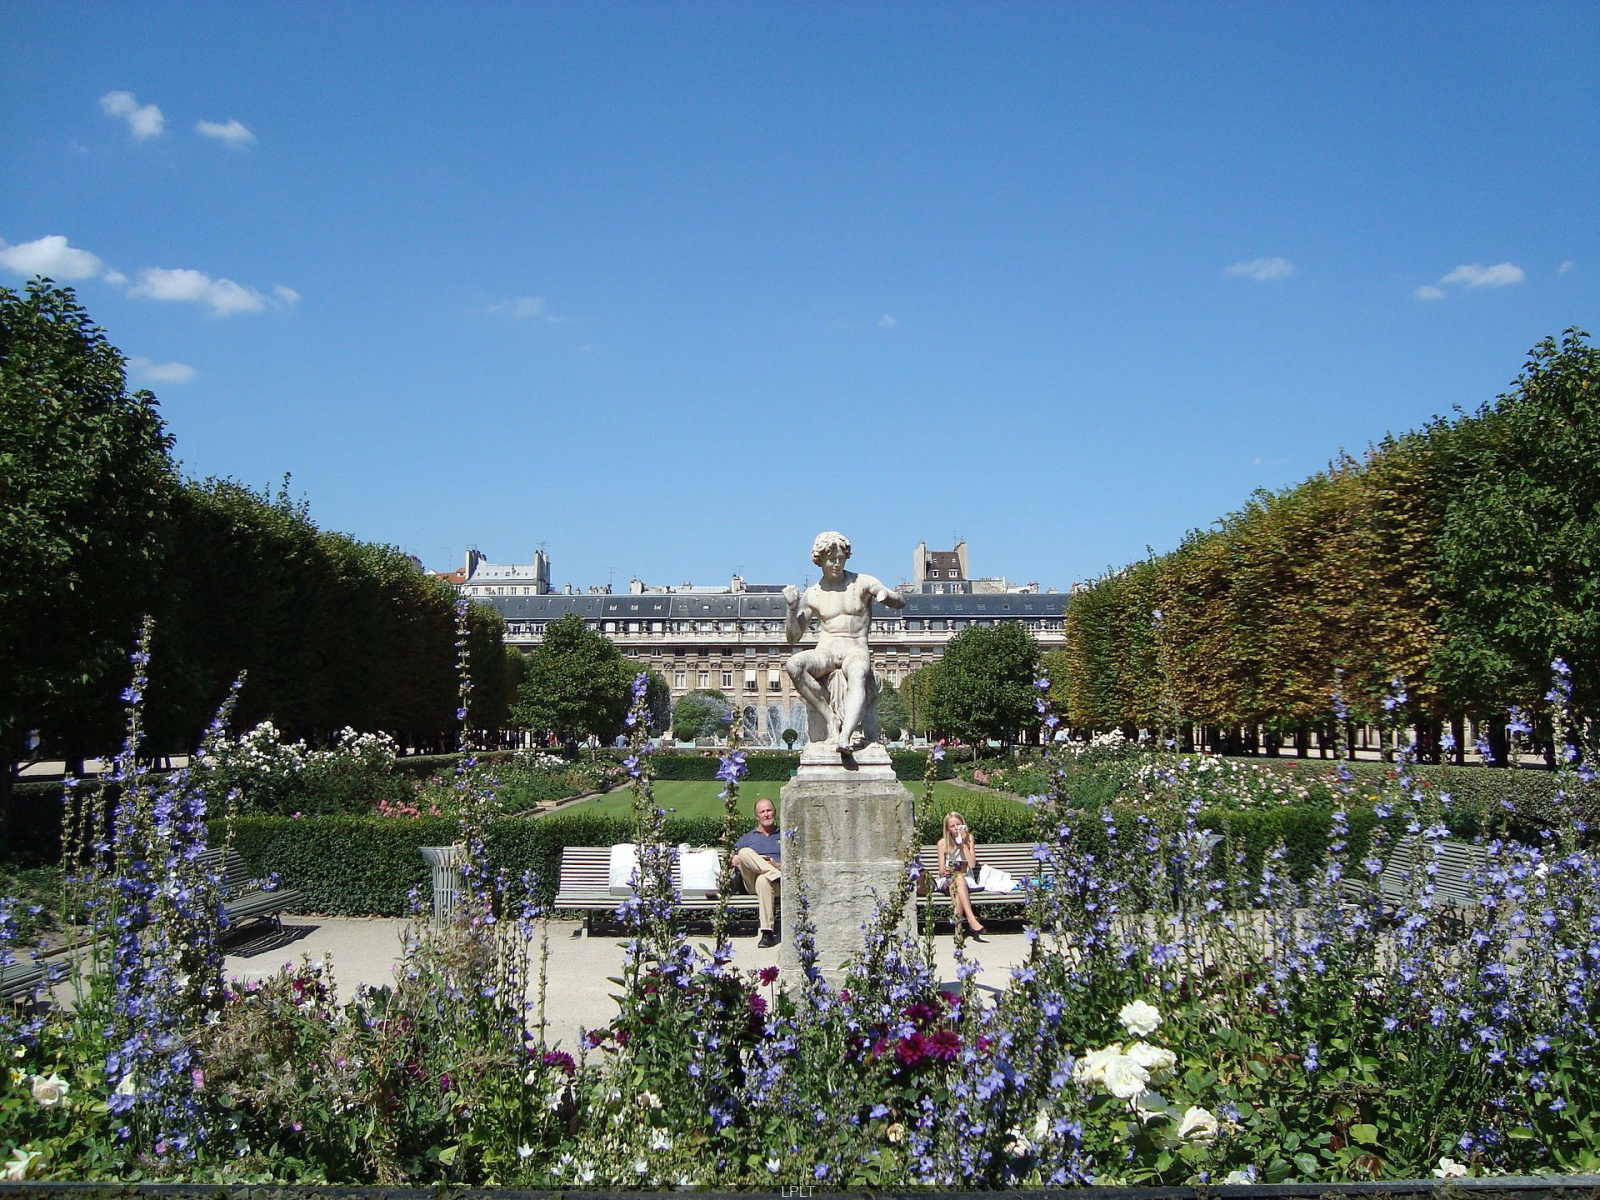 Foto de Palais Royal Jardins e mais fotos de stock de Paris - Paris,  Palácio Real - Tulherias, Jardin du Palais Royal - iStock